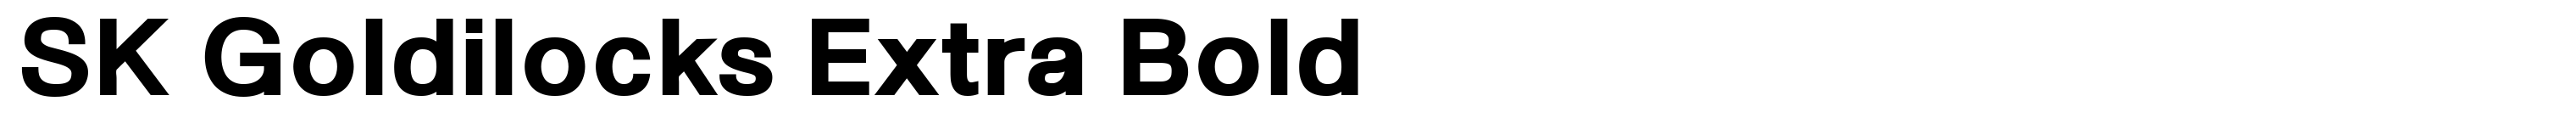 SK Goldilocks Extra Bold